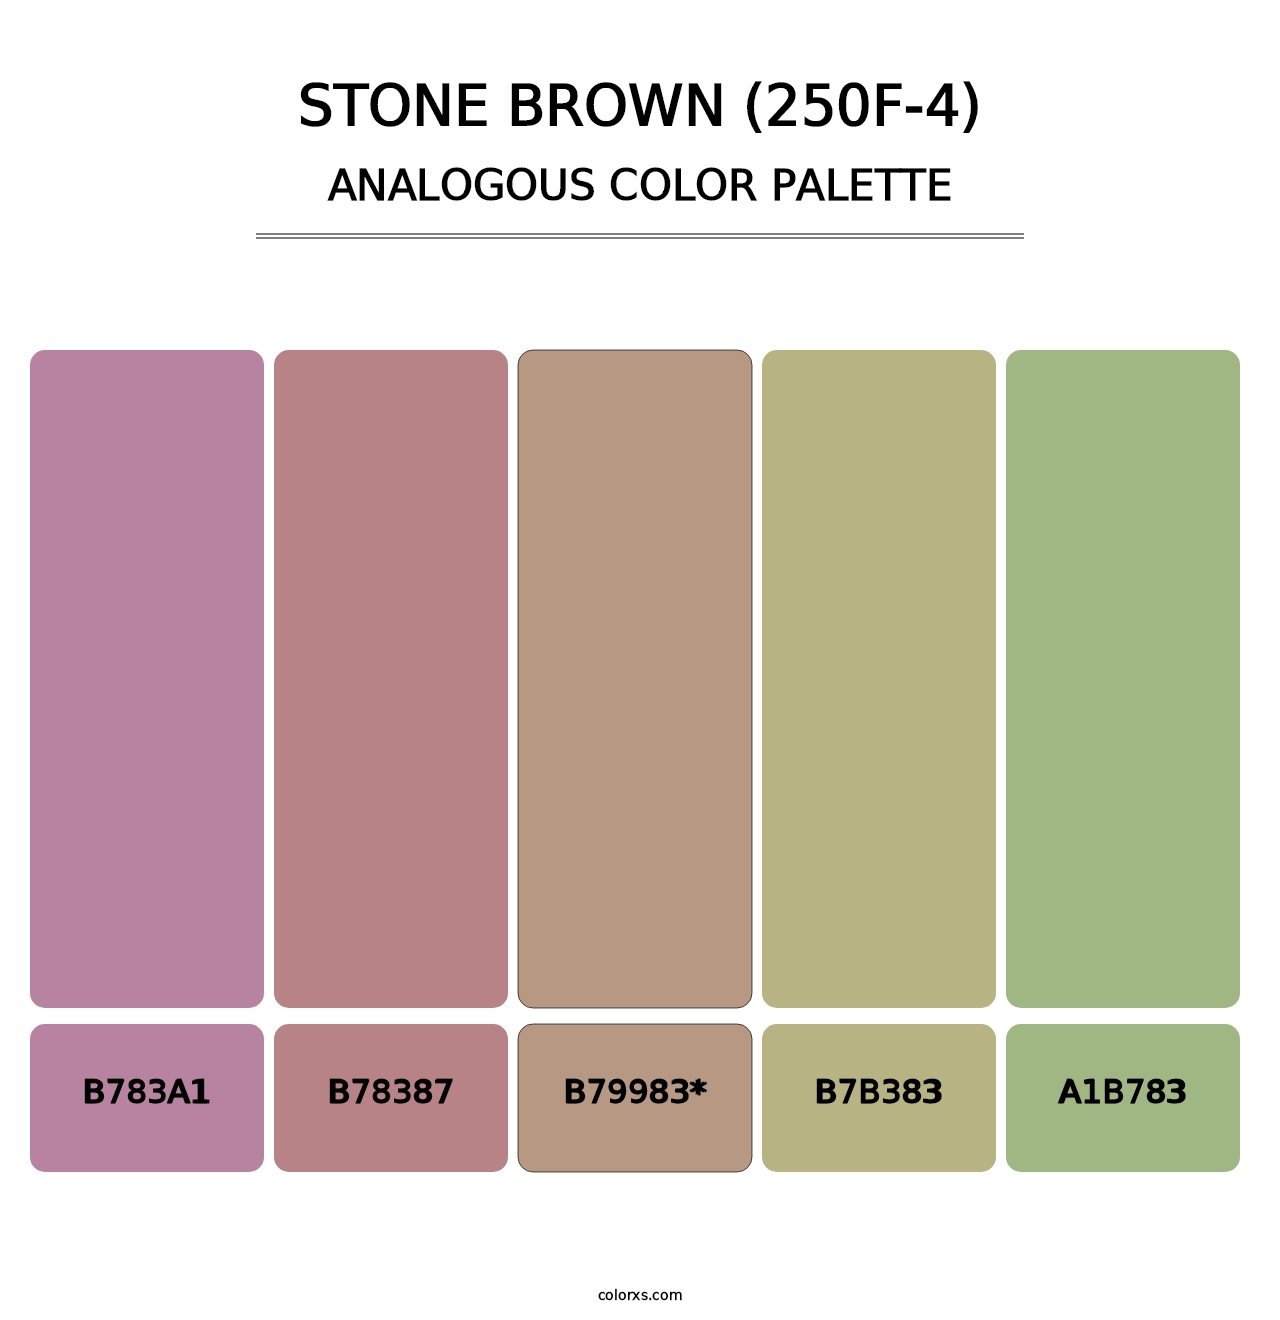 Stone Brown (250F-4) - Analogous Color Palette